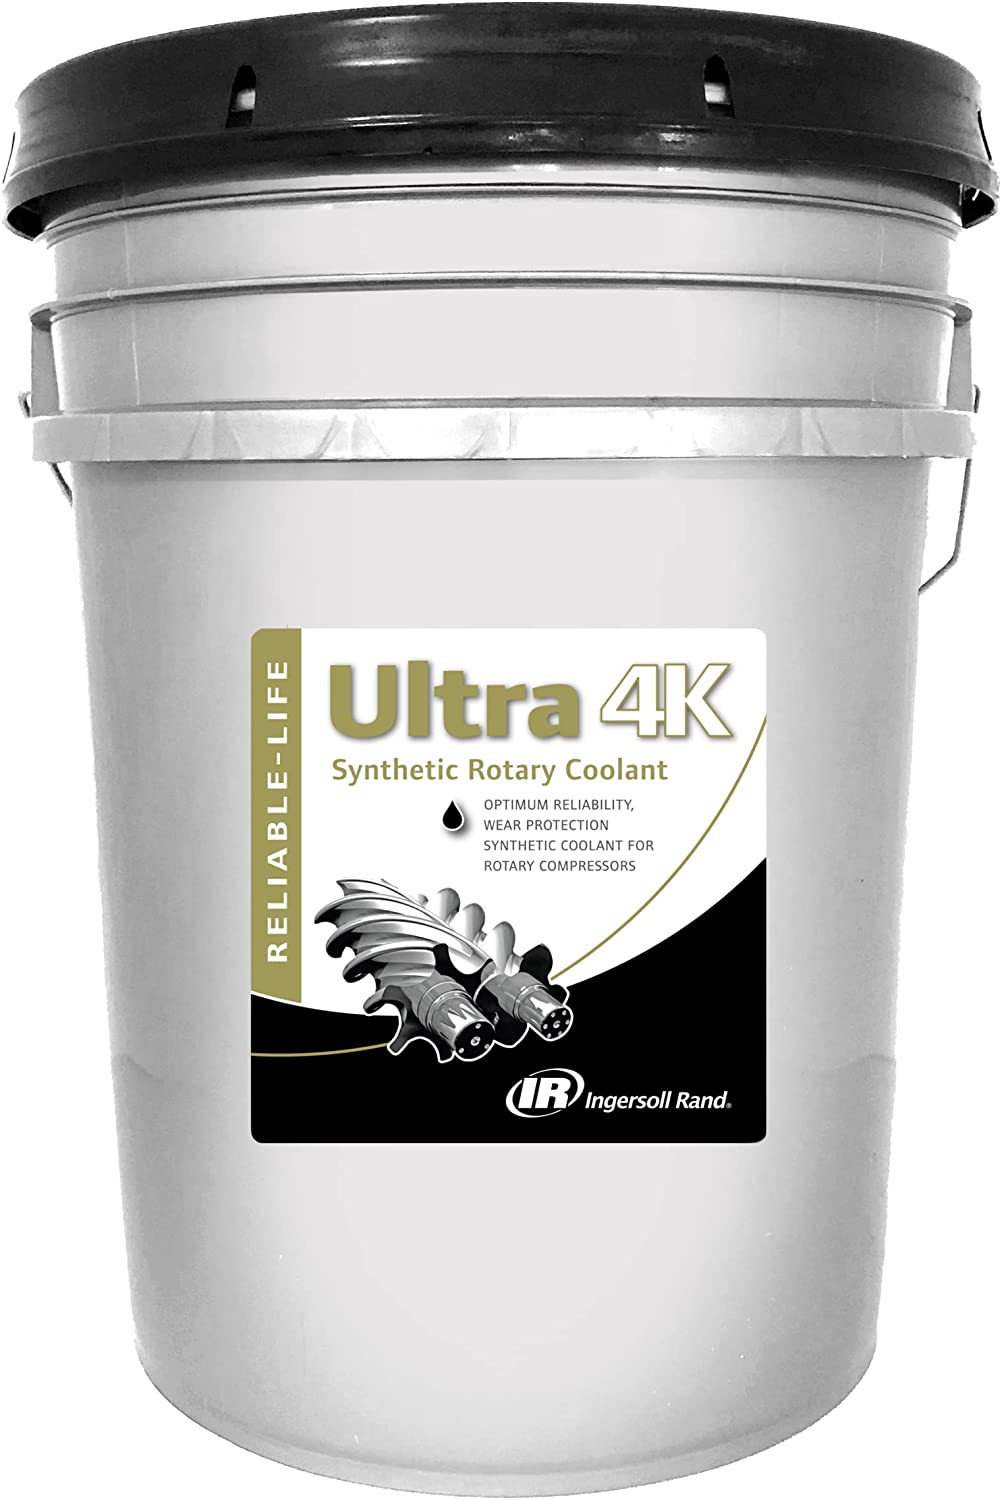 Ultra 4K Lubricant 20L